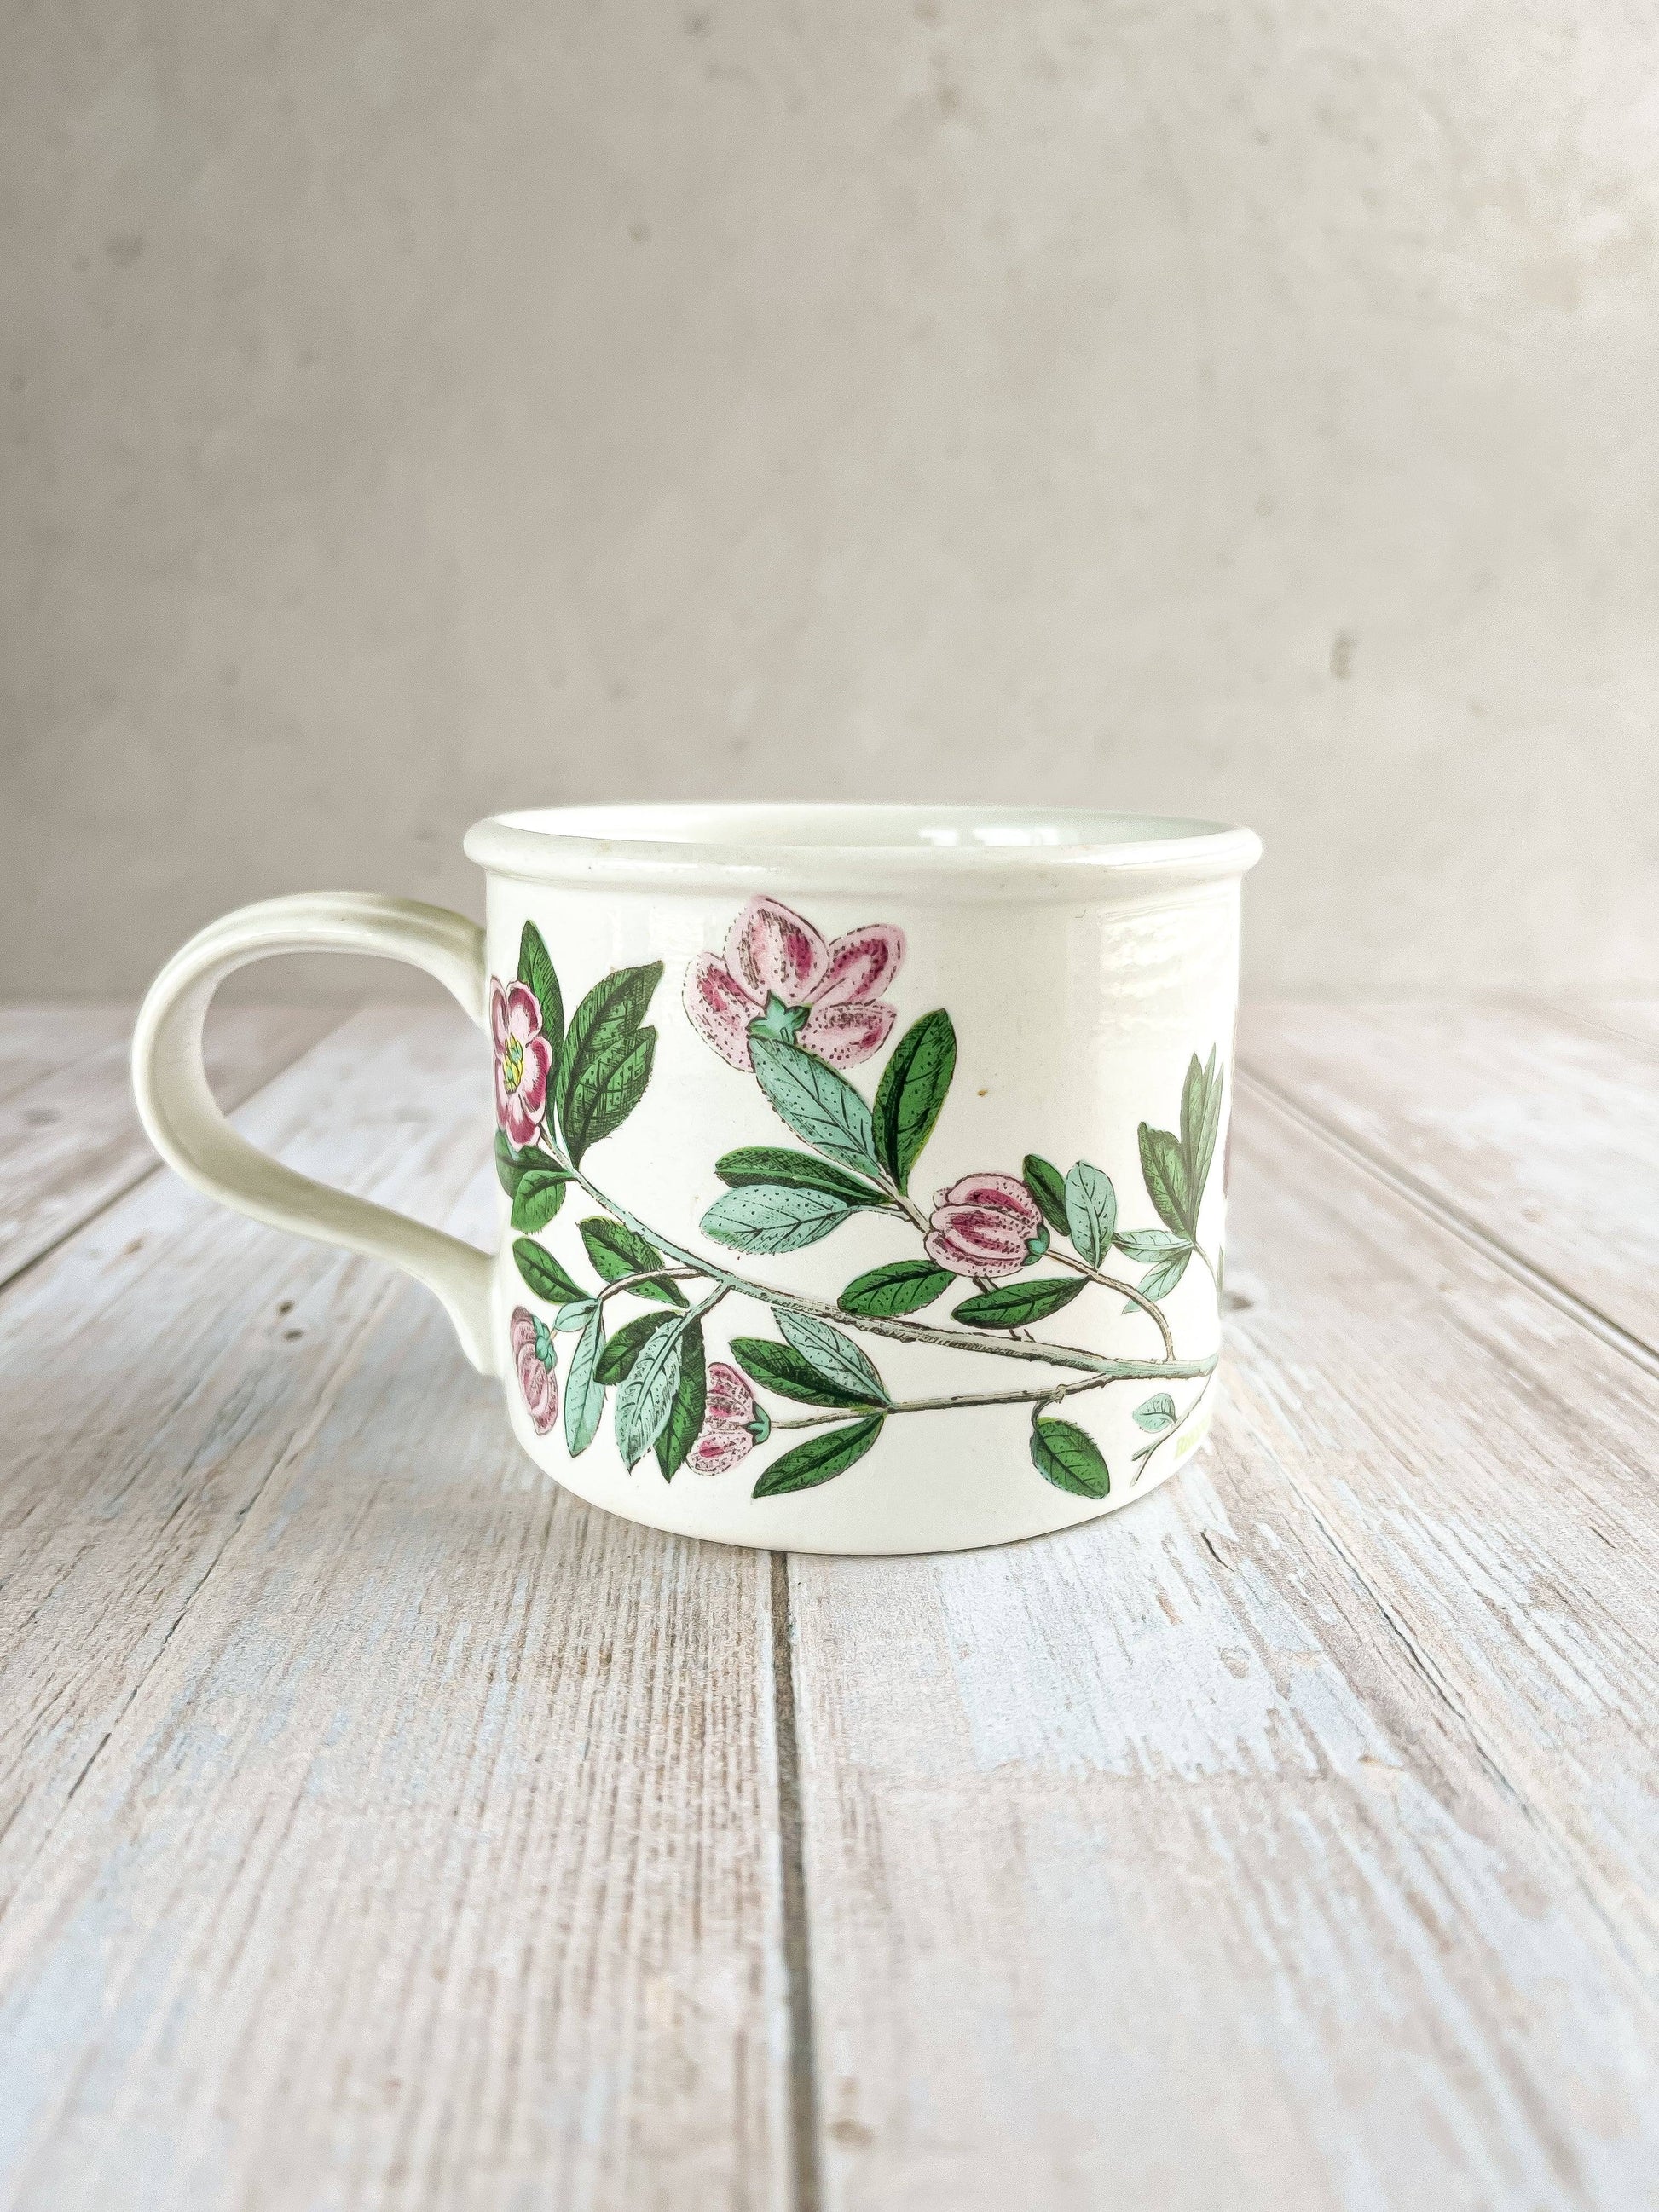 Portmeirion Botanic Garden Flat Drum Cup - 'Rhododendron Lepidote' Design - SOSC Home